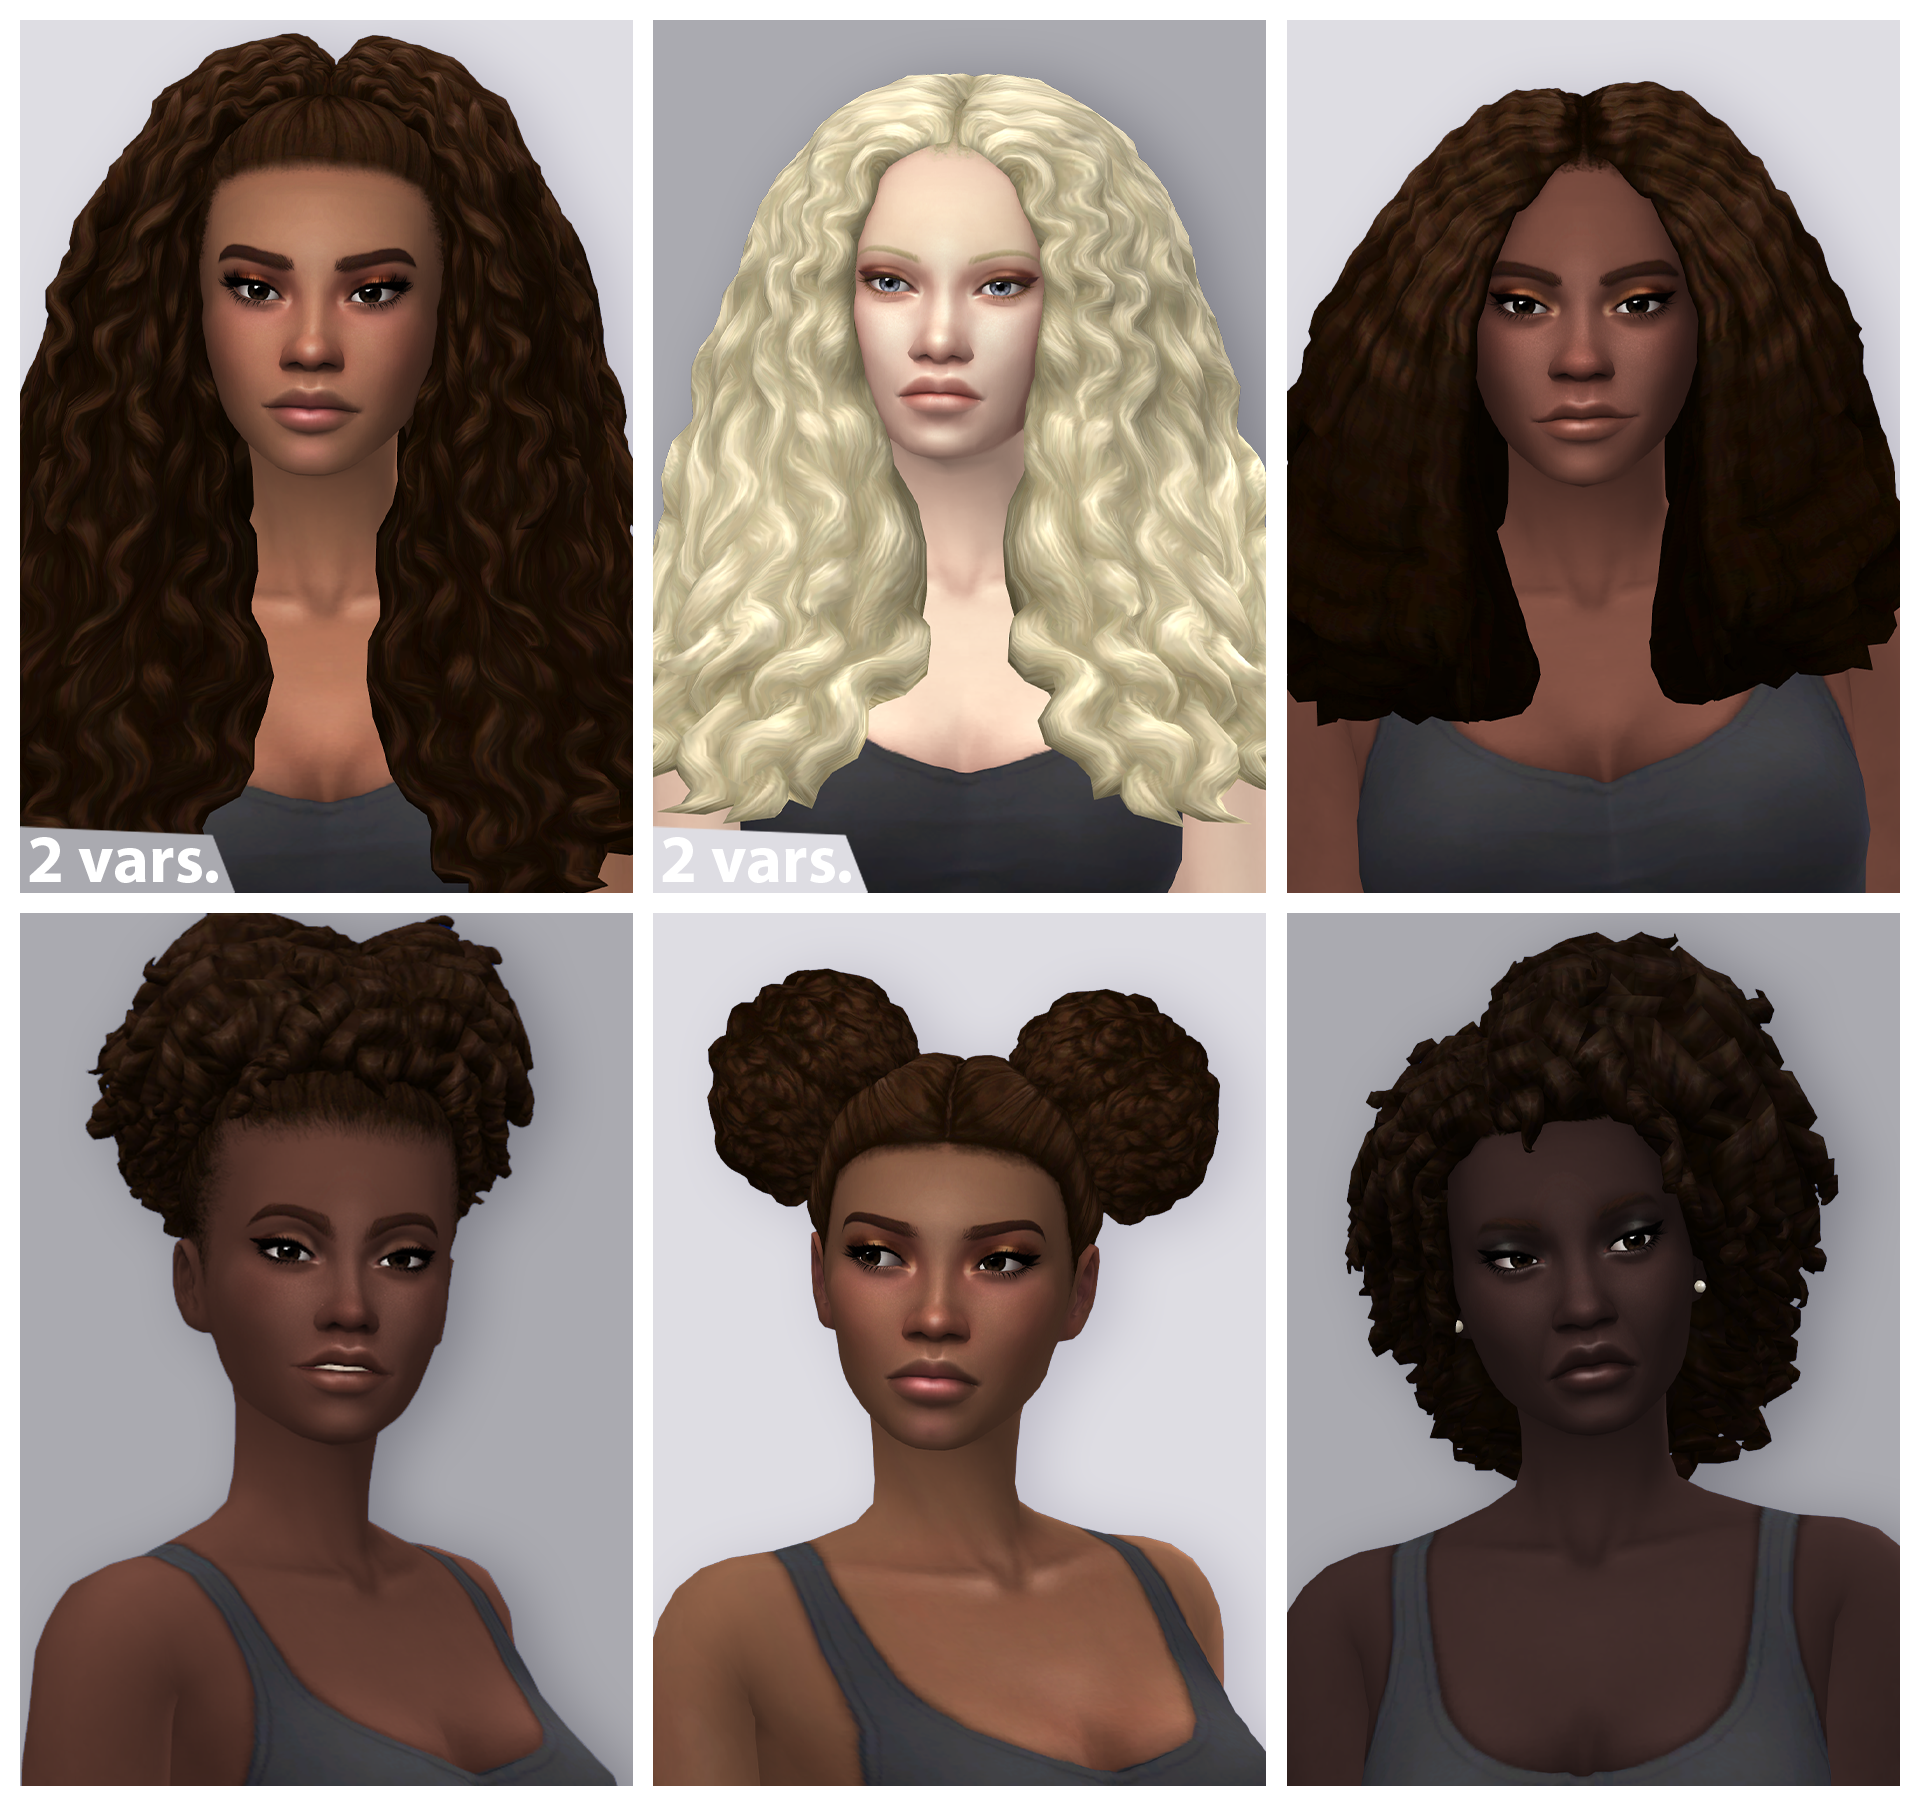 Naturally Mine - Adult Hair - The Sims 4 Create a Sim - CurseForge